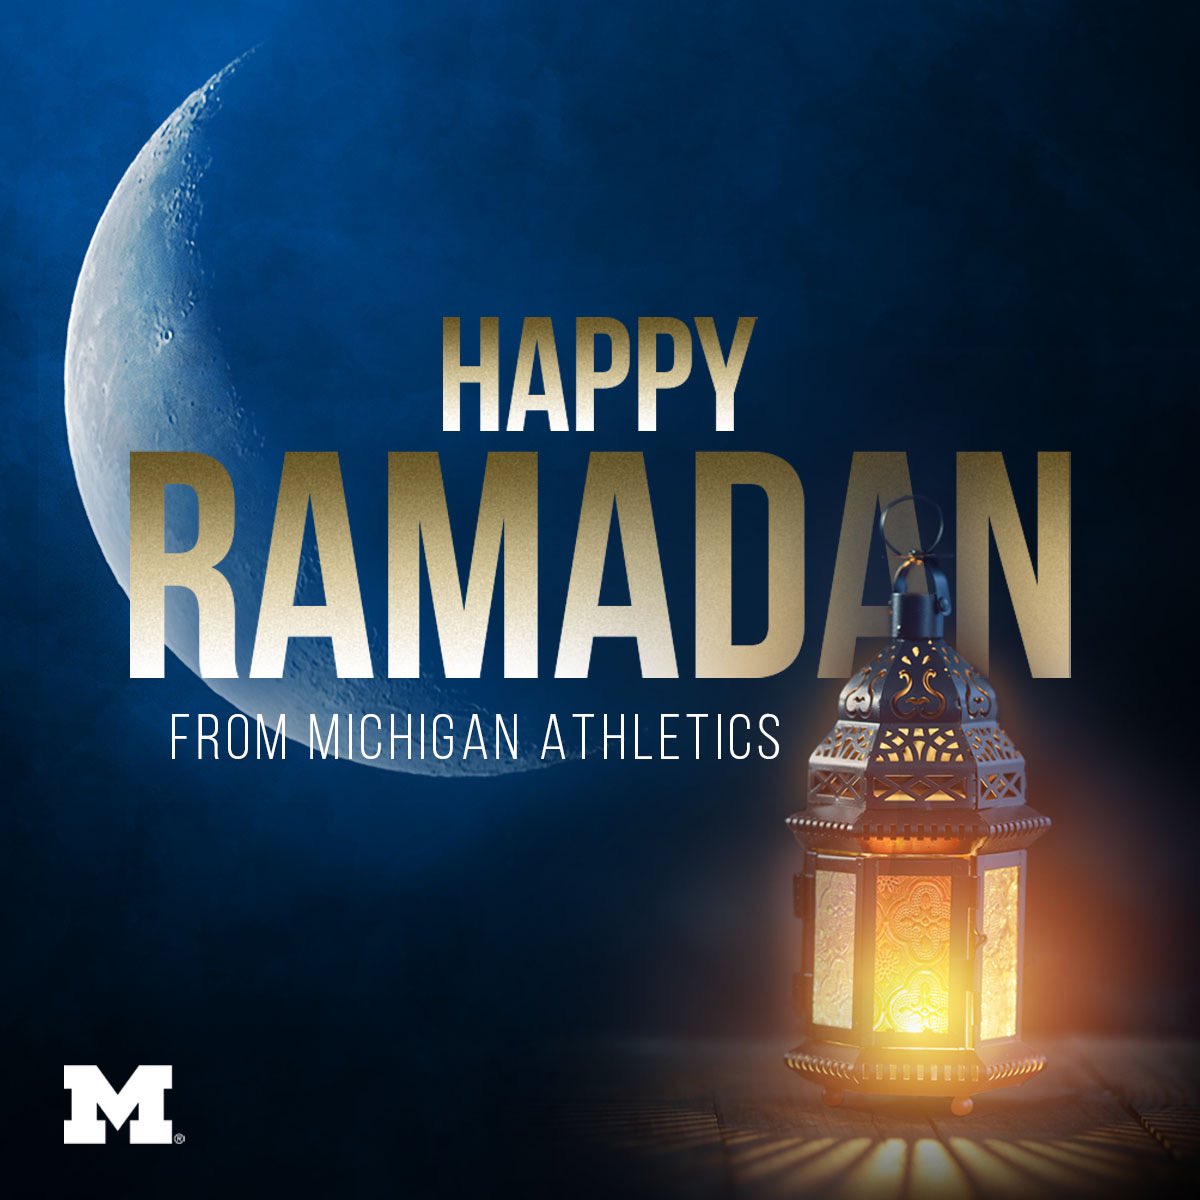 Ramadan Mubarak to our Wolverines celebrating!